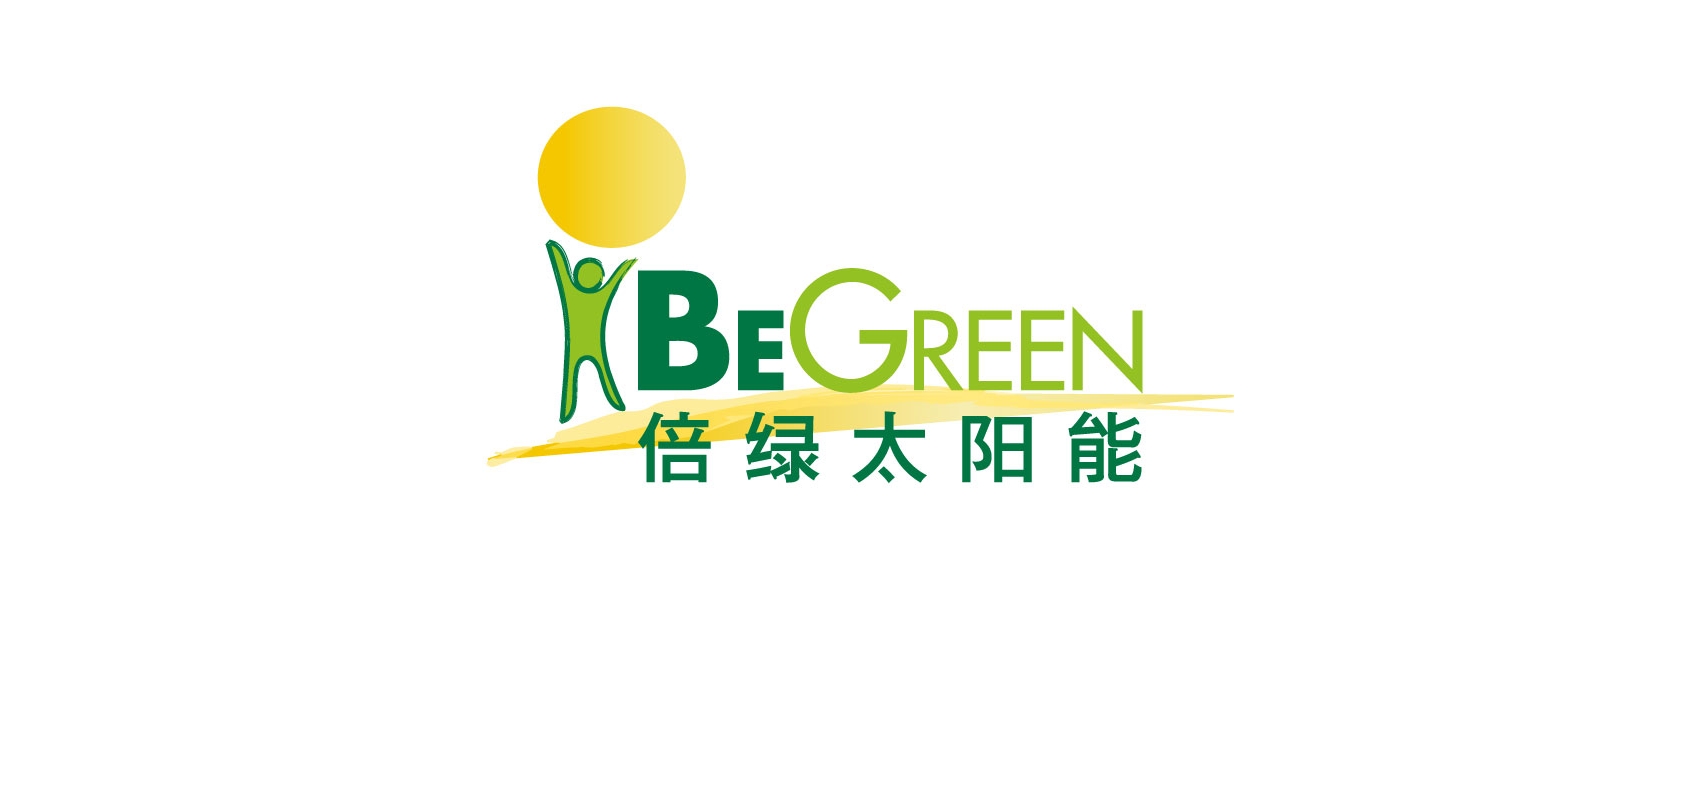 Begreen/倍绿品牌logo